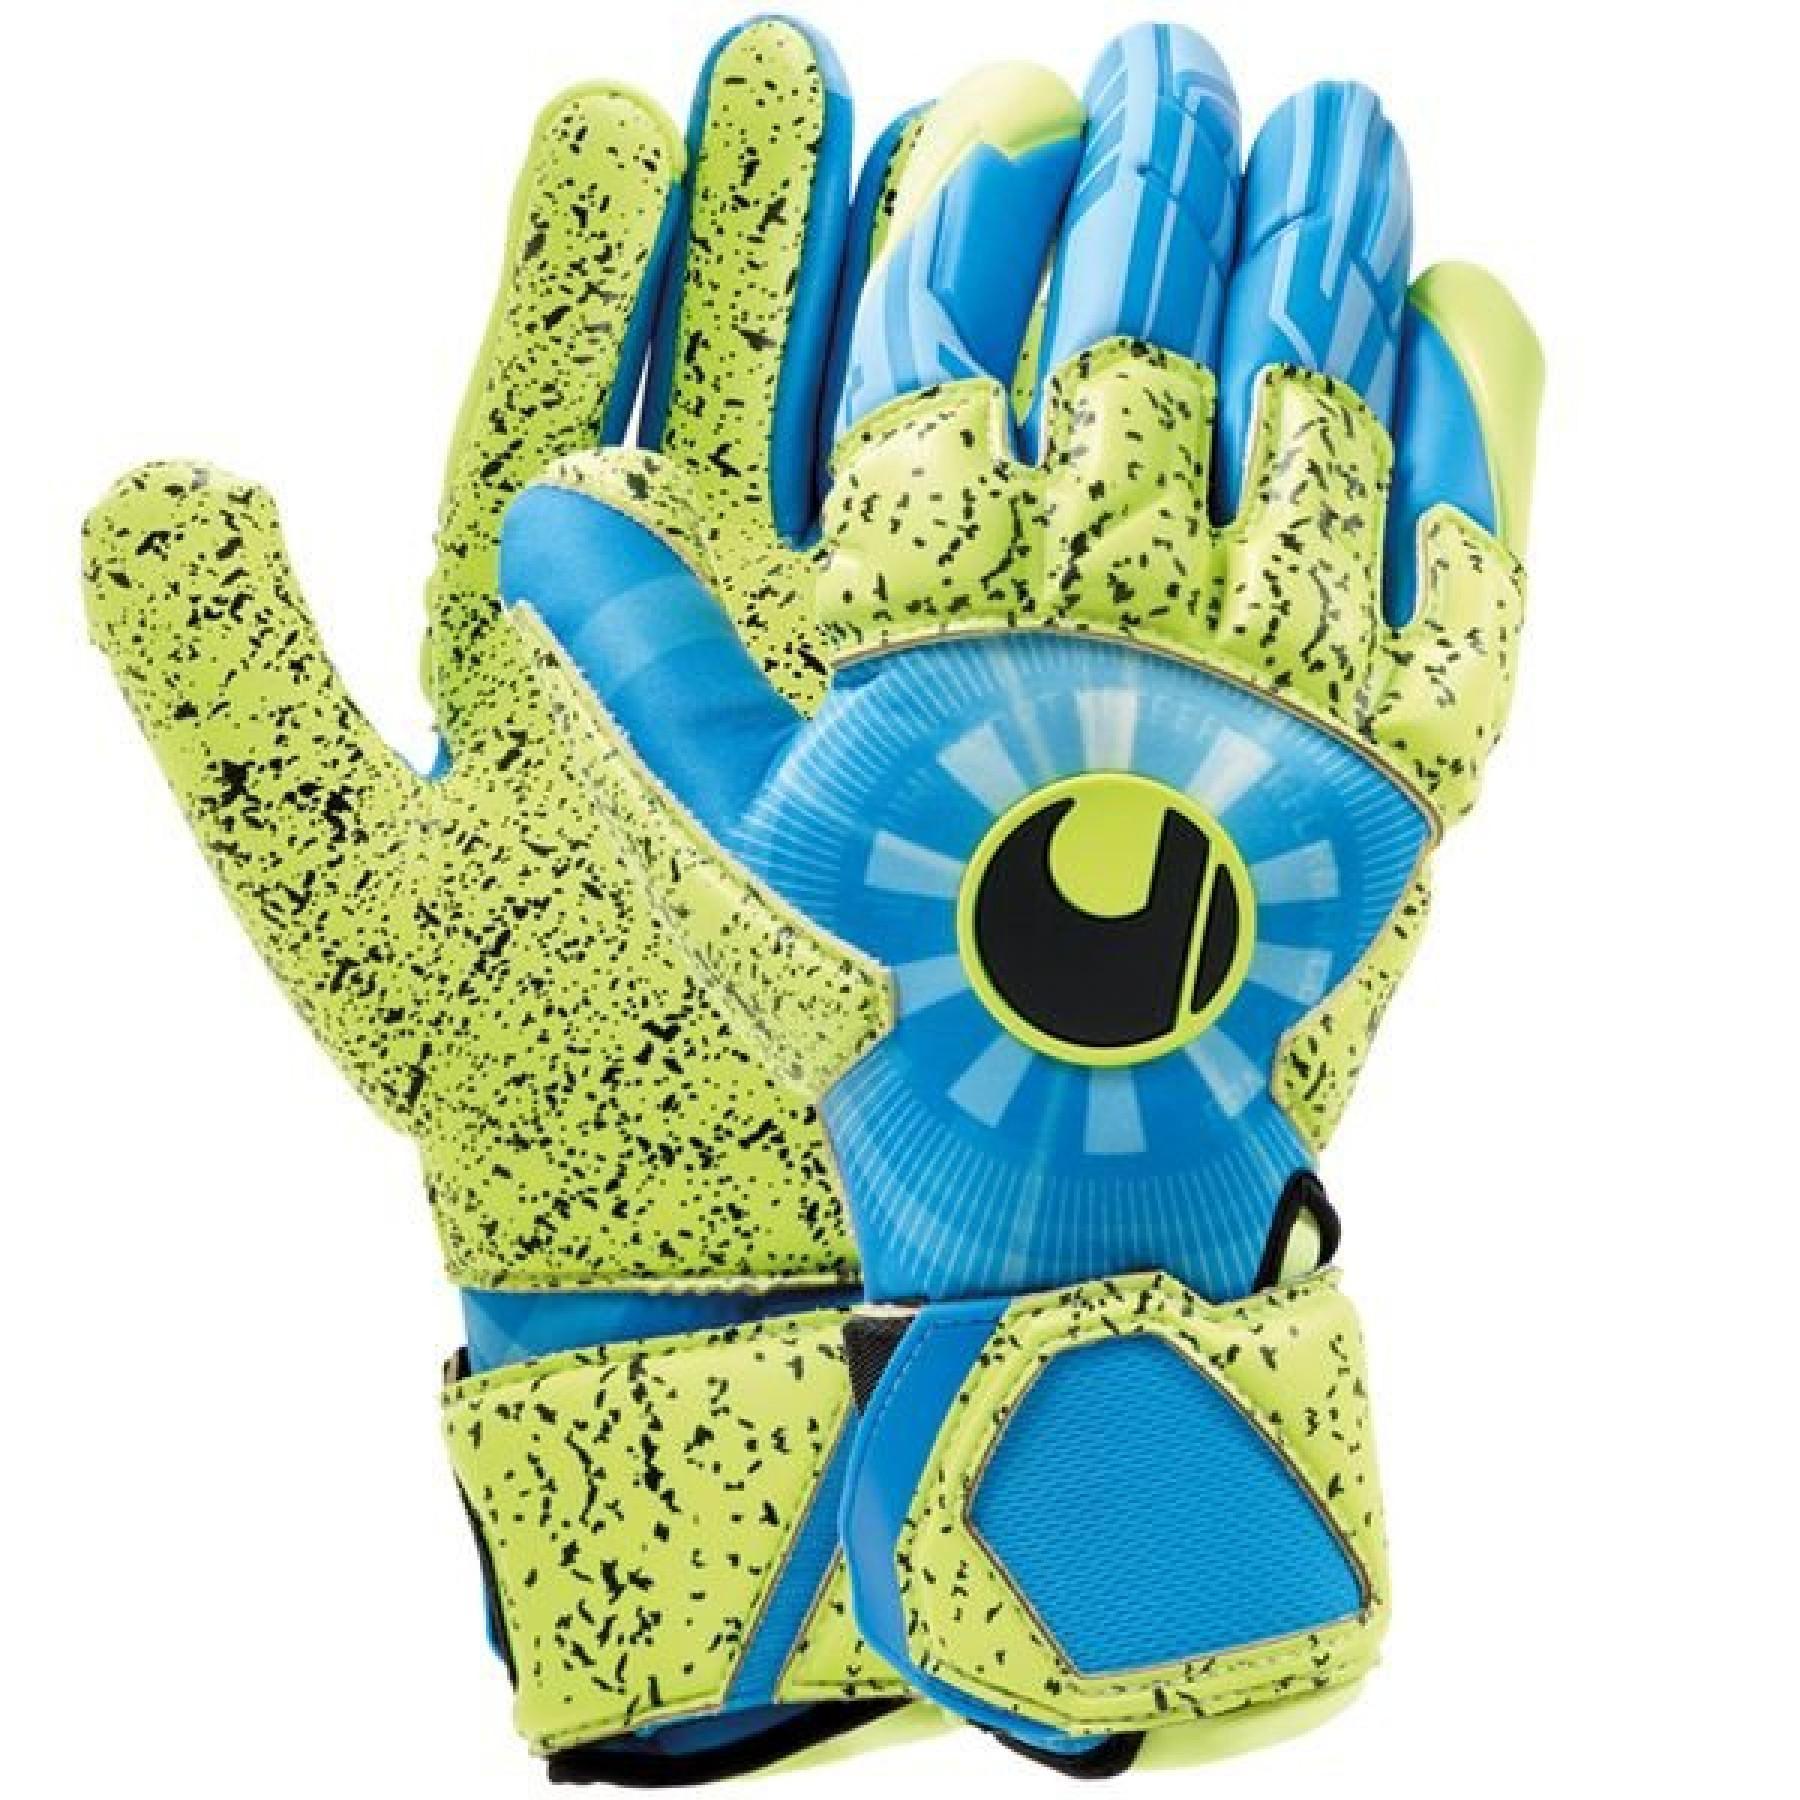 Goalkeeper gloves Uhlsport Radar control Supergrip Reflex 2019